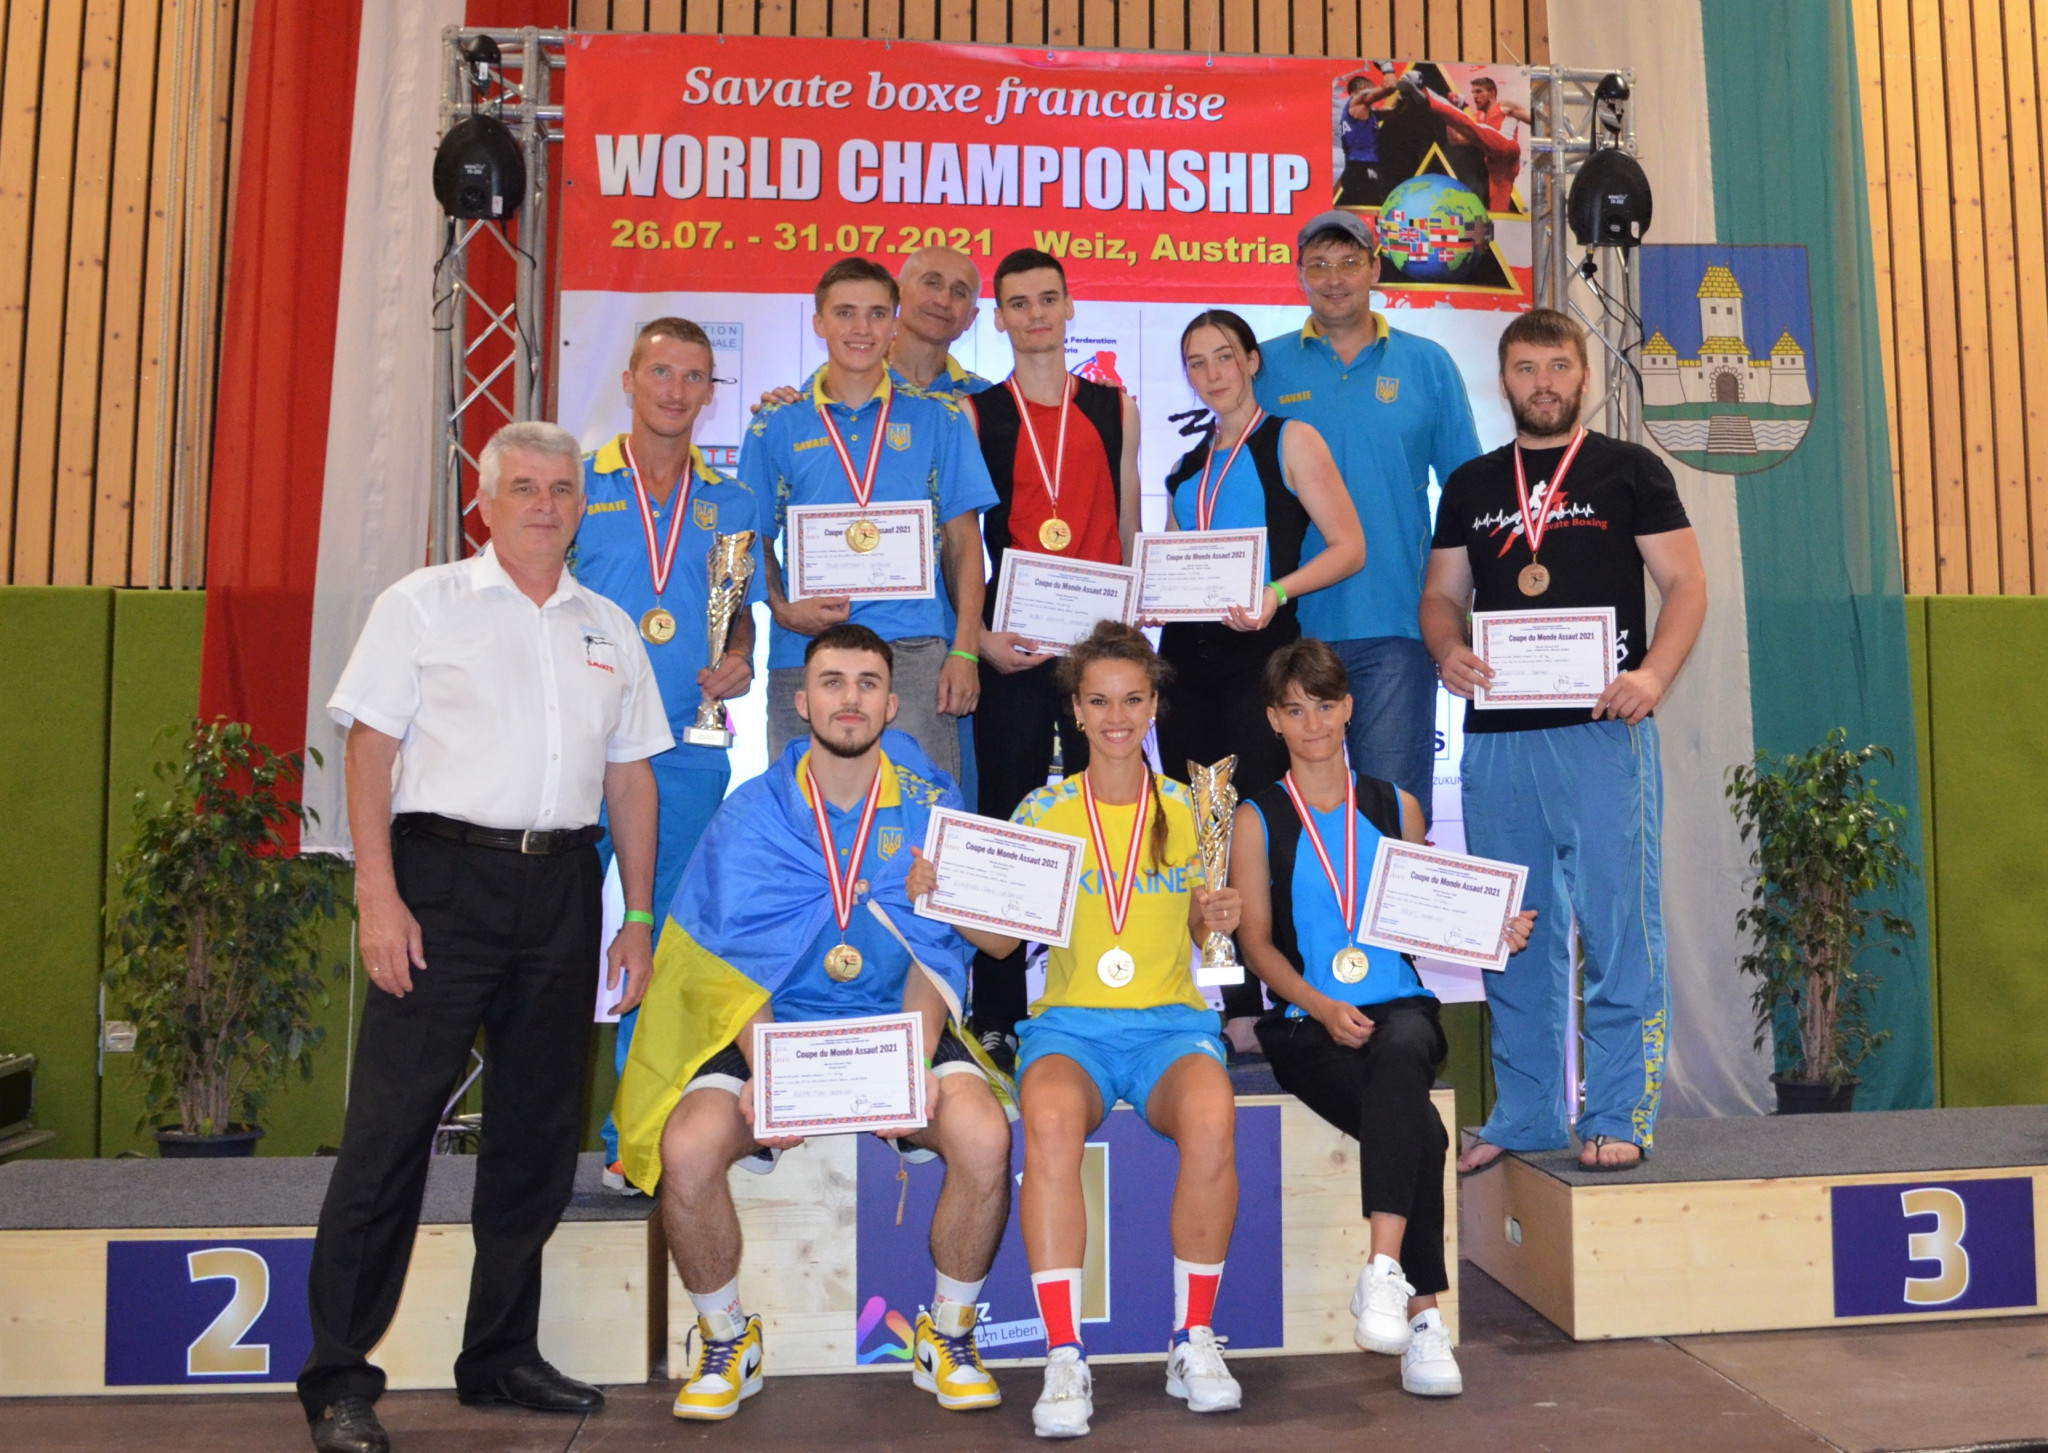 Ukraine dominate in assaut event at World Savate Championships 